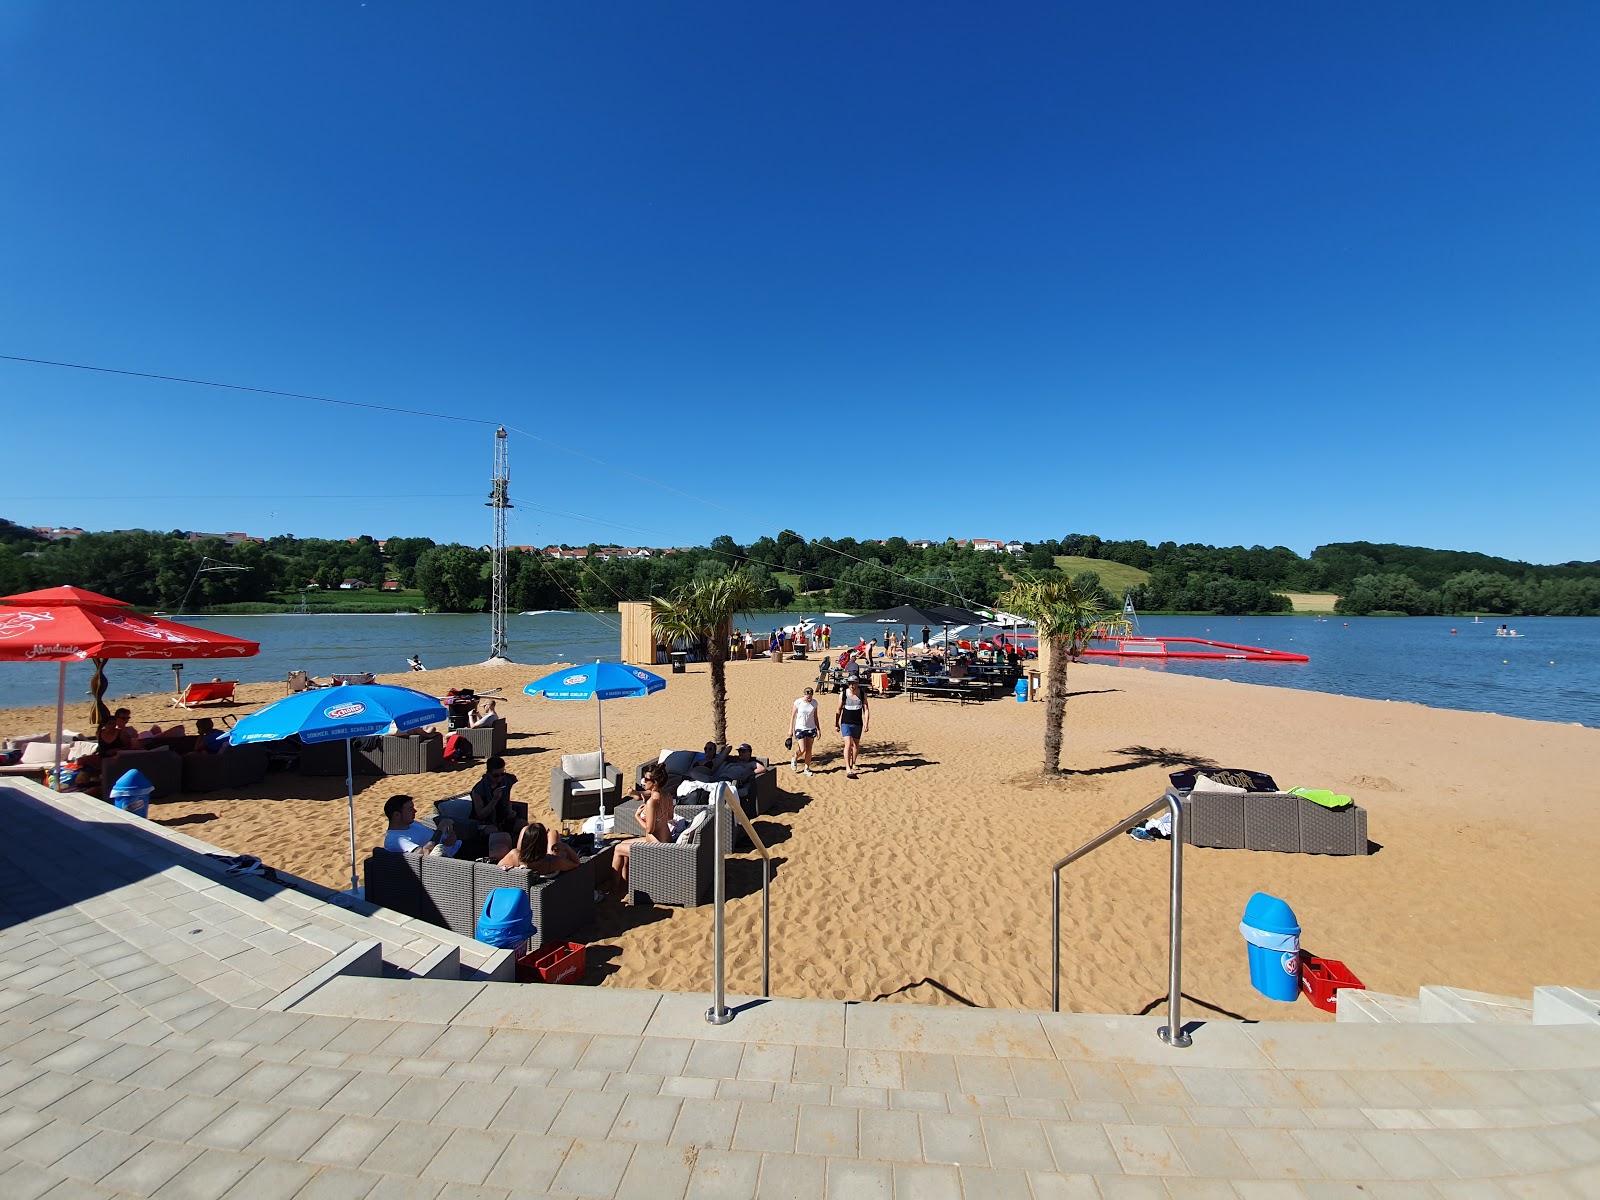 Photo de Spielplatz Wakepark Brombachsee avec plage spacieuse